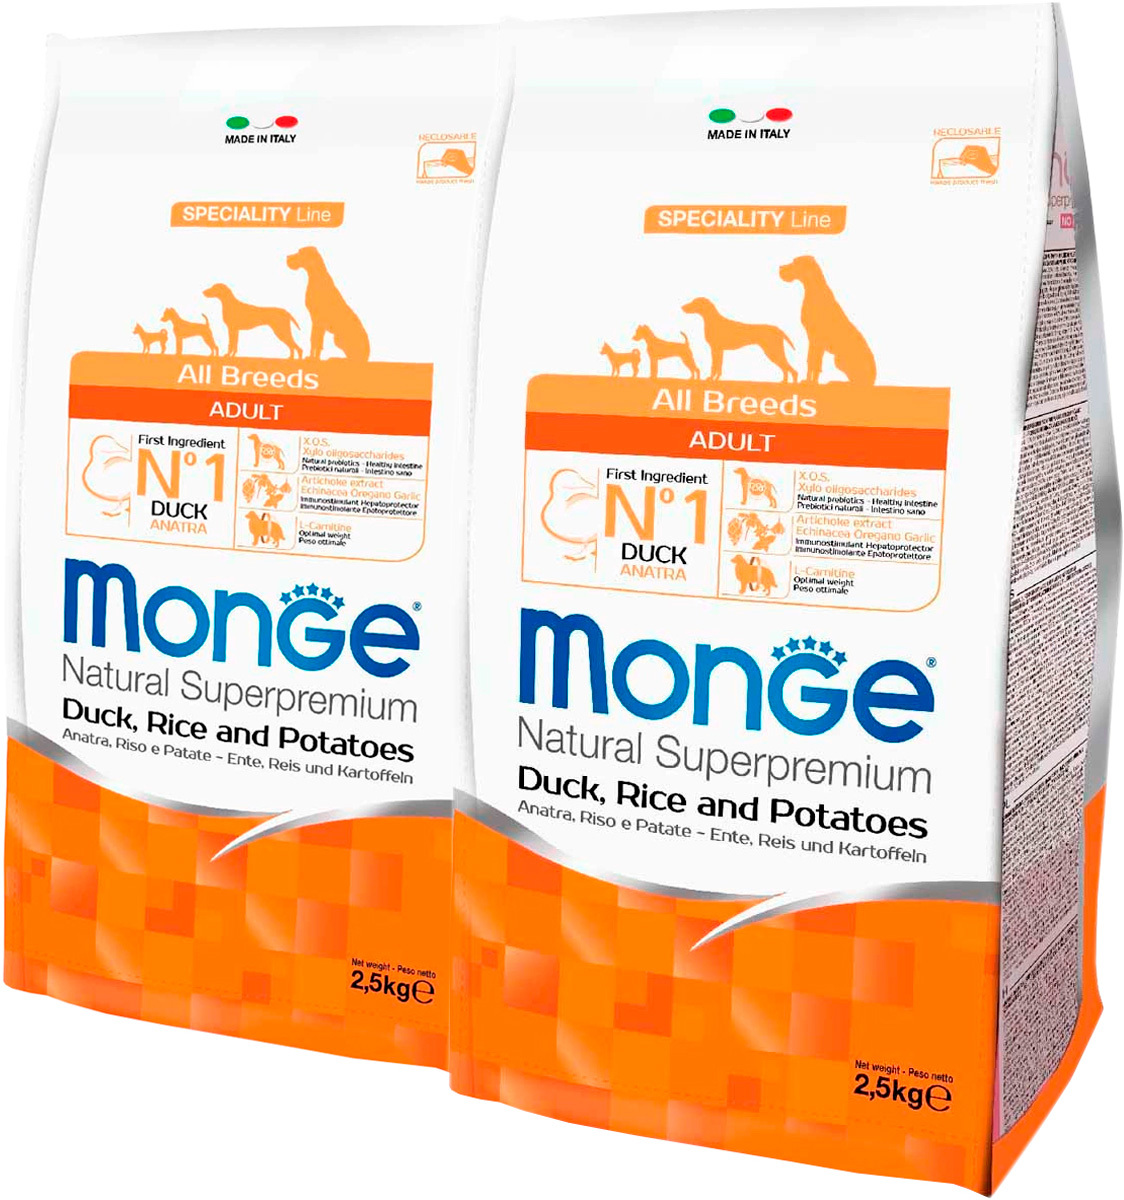 Куплю сухой корм монж. Сухой корм Monge Extra small. Monge Speciality line Puppy & Junior Salmon. Monge Speciality line корм для собак. Корм для собак премиум класса Монже.